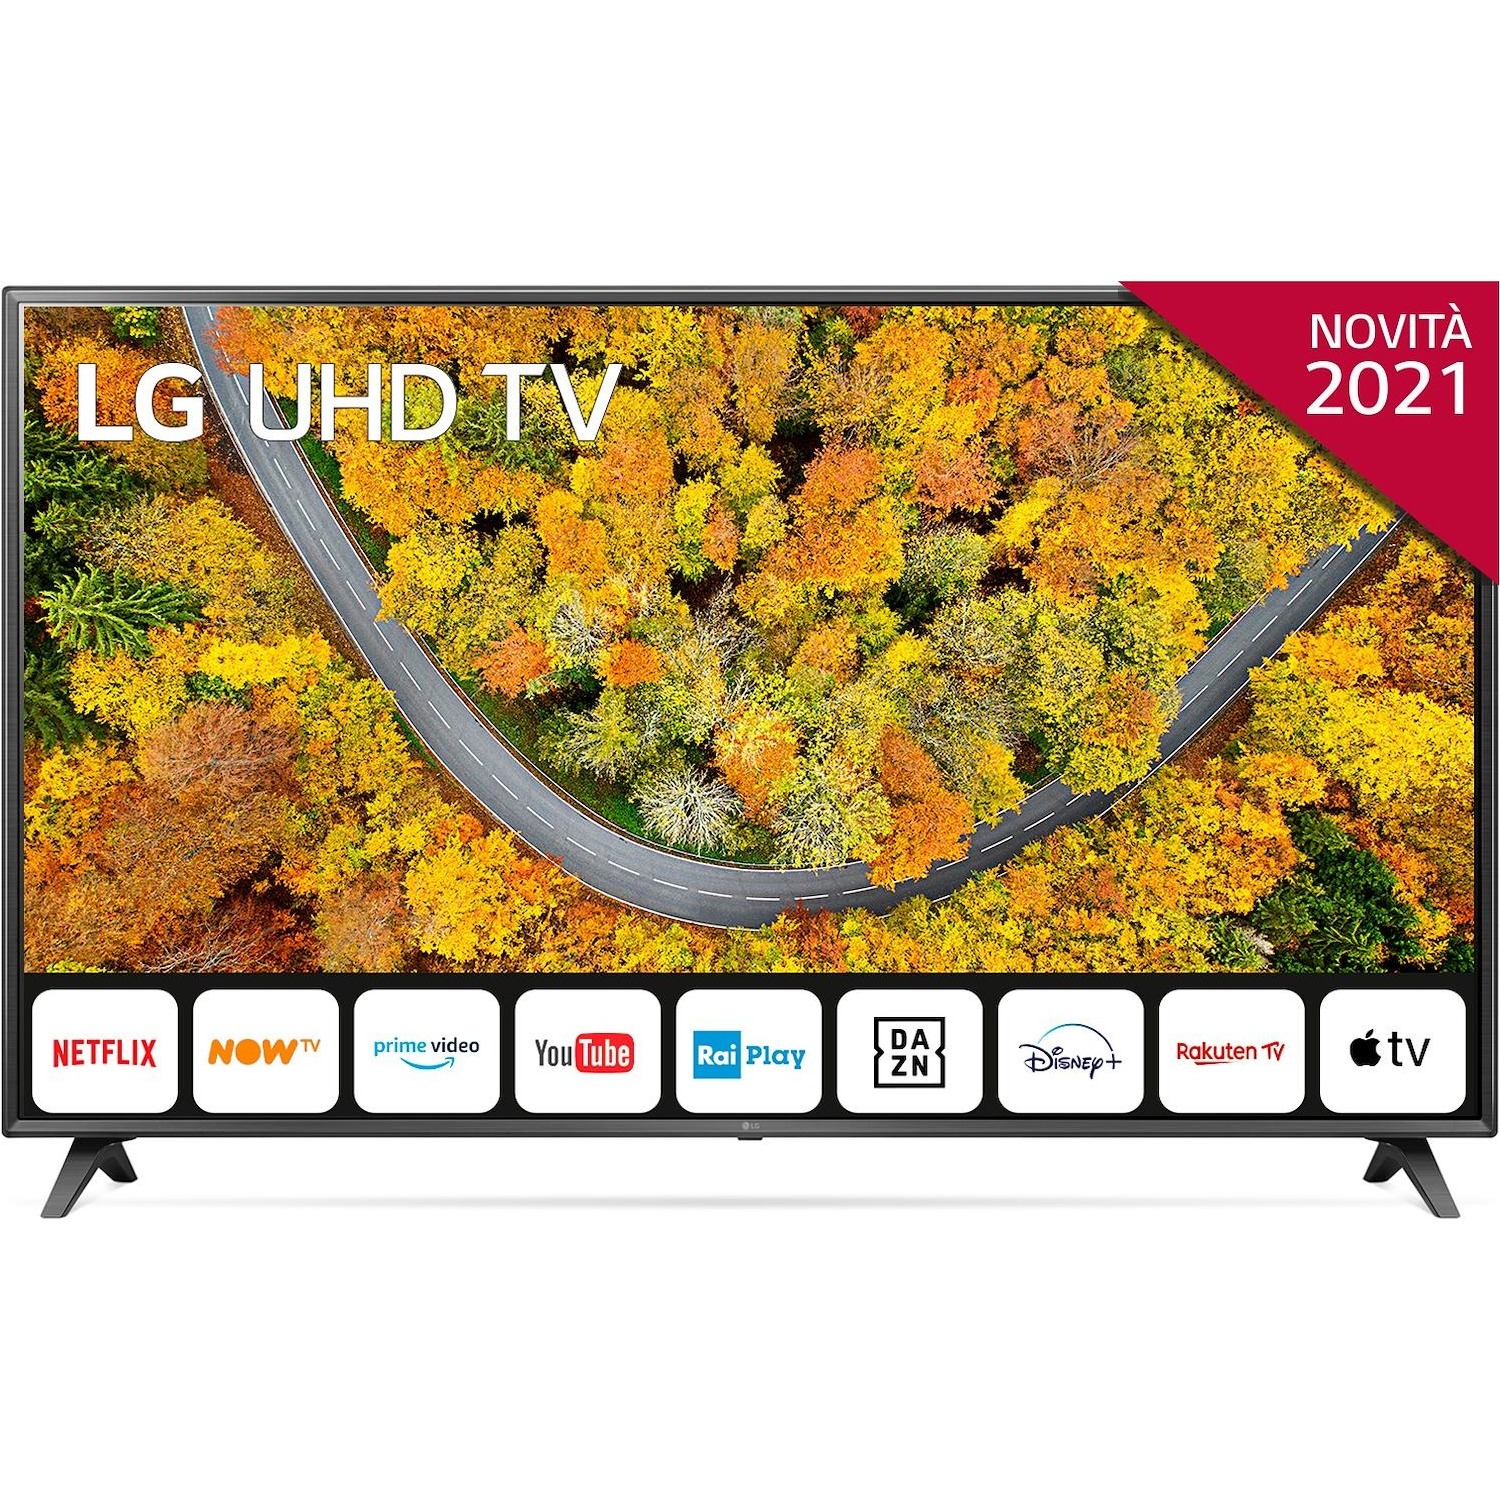 Immagine per TV LED Smart 4K UHD LG 75UP75006 da DIMOStore